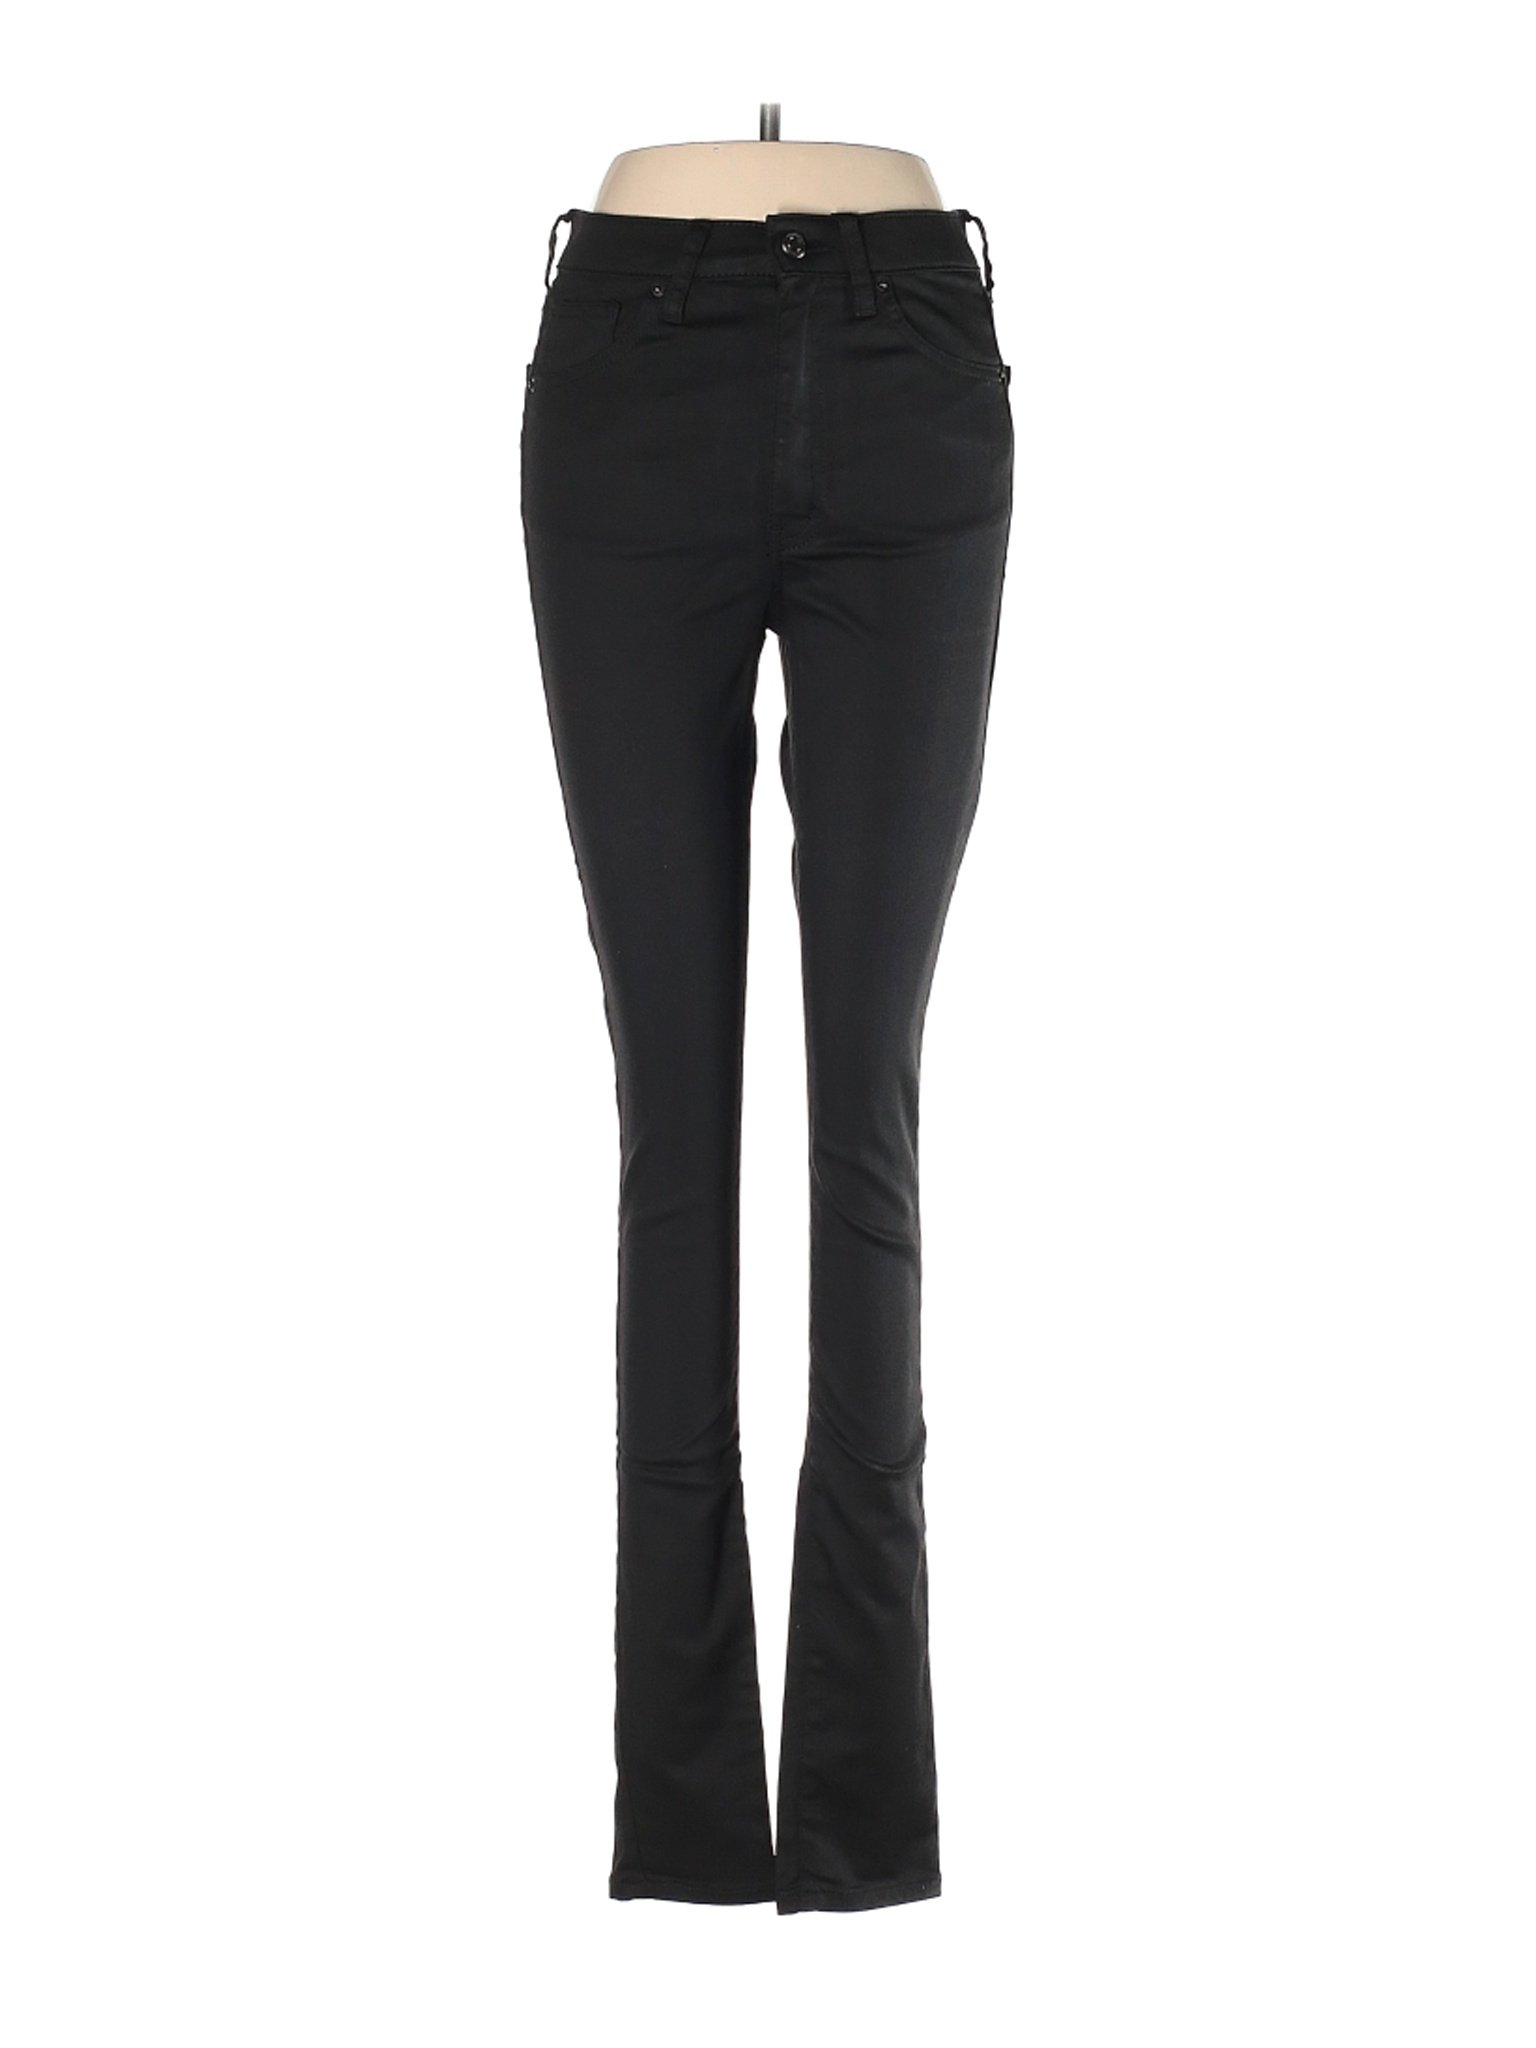 Topshop Women Black Jeans 28 W Tall | eBay